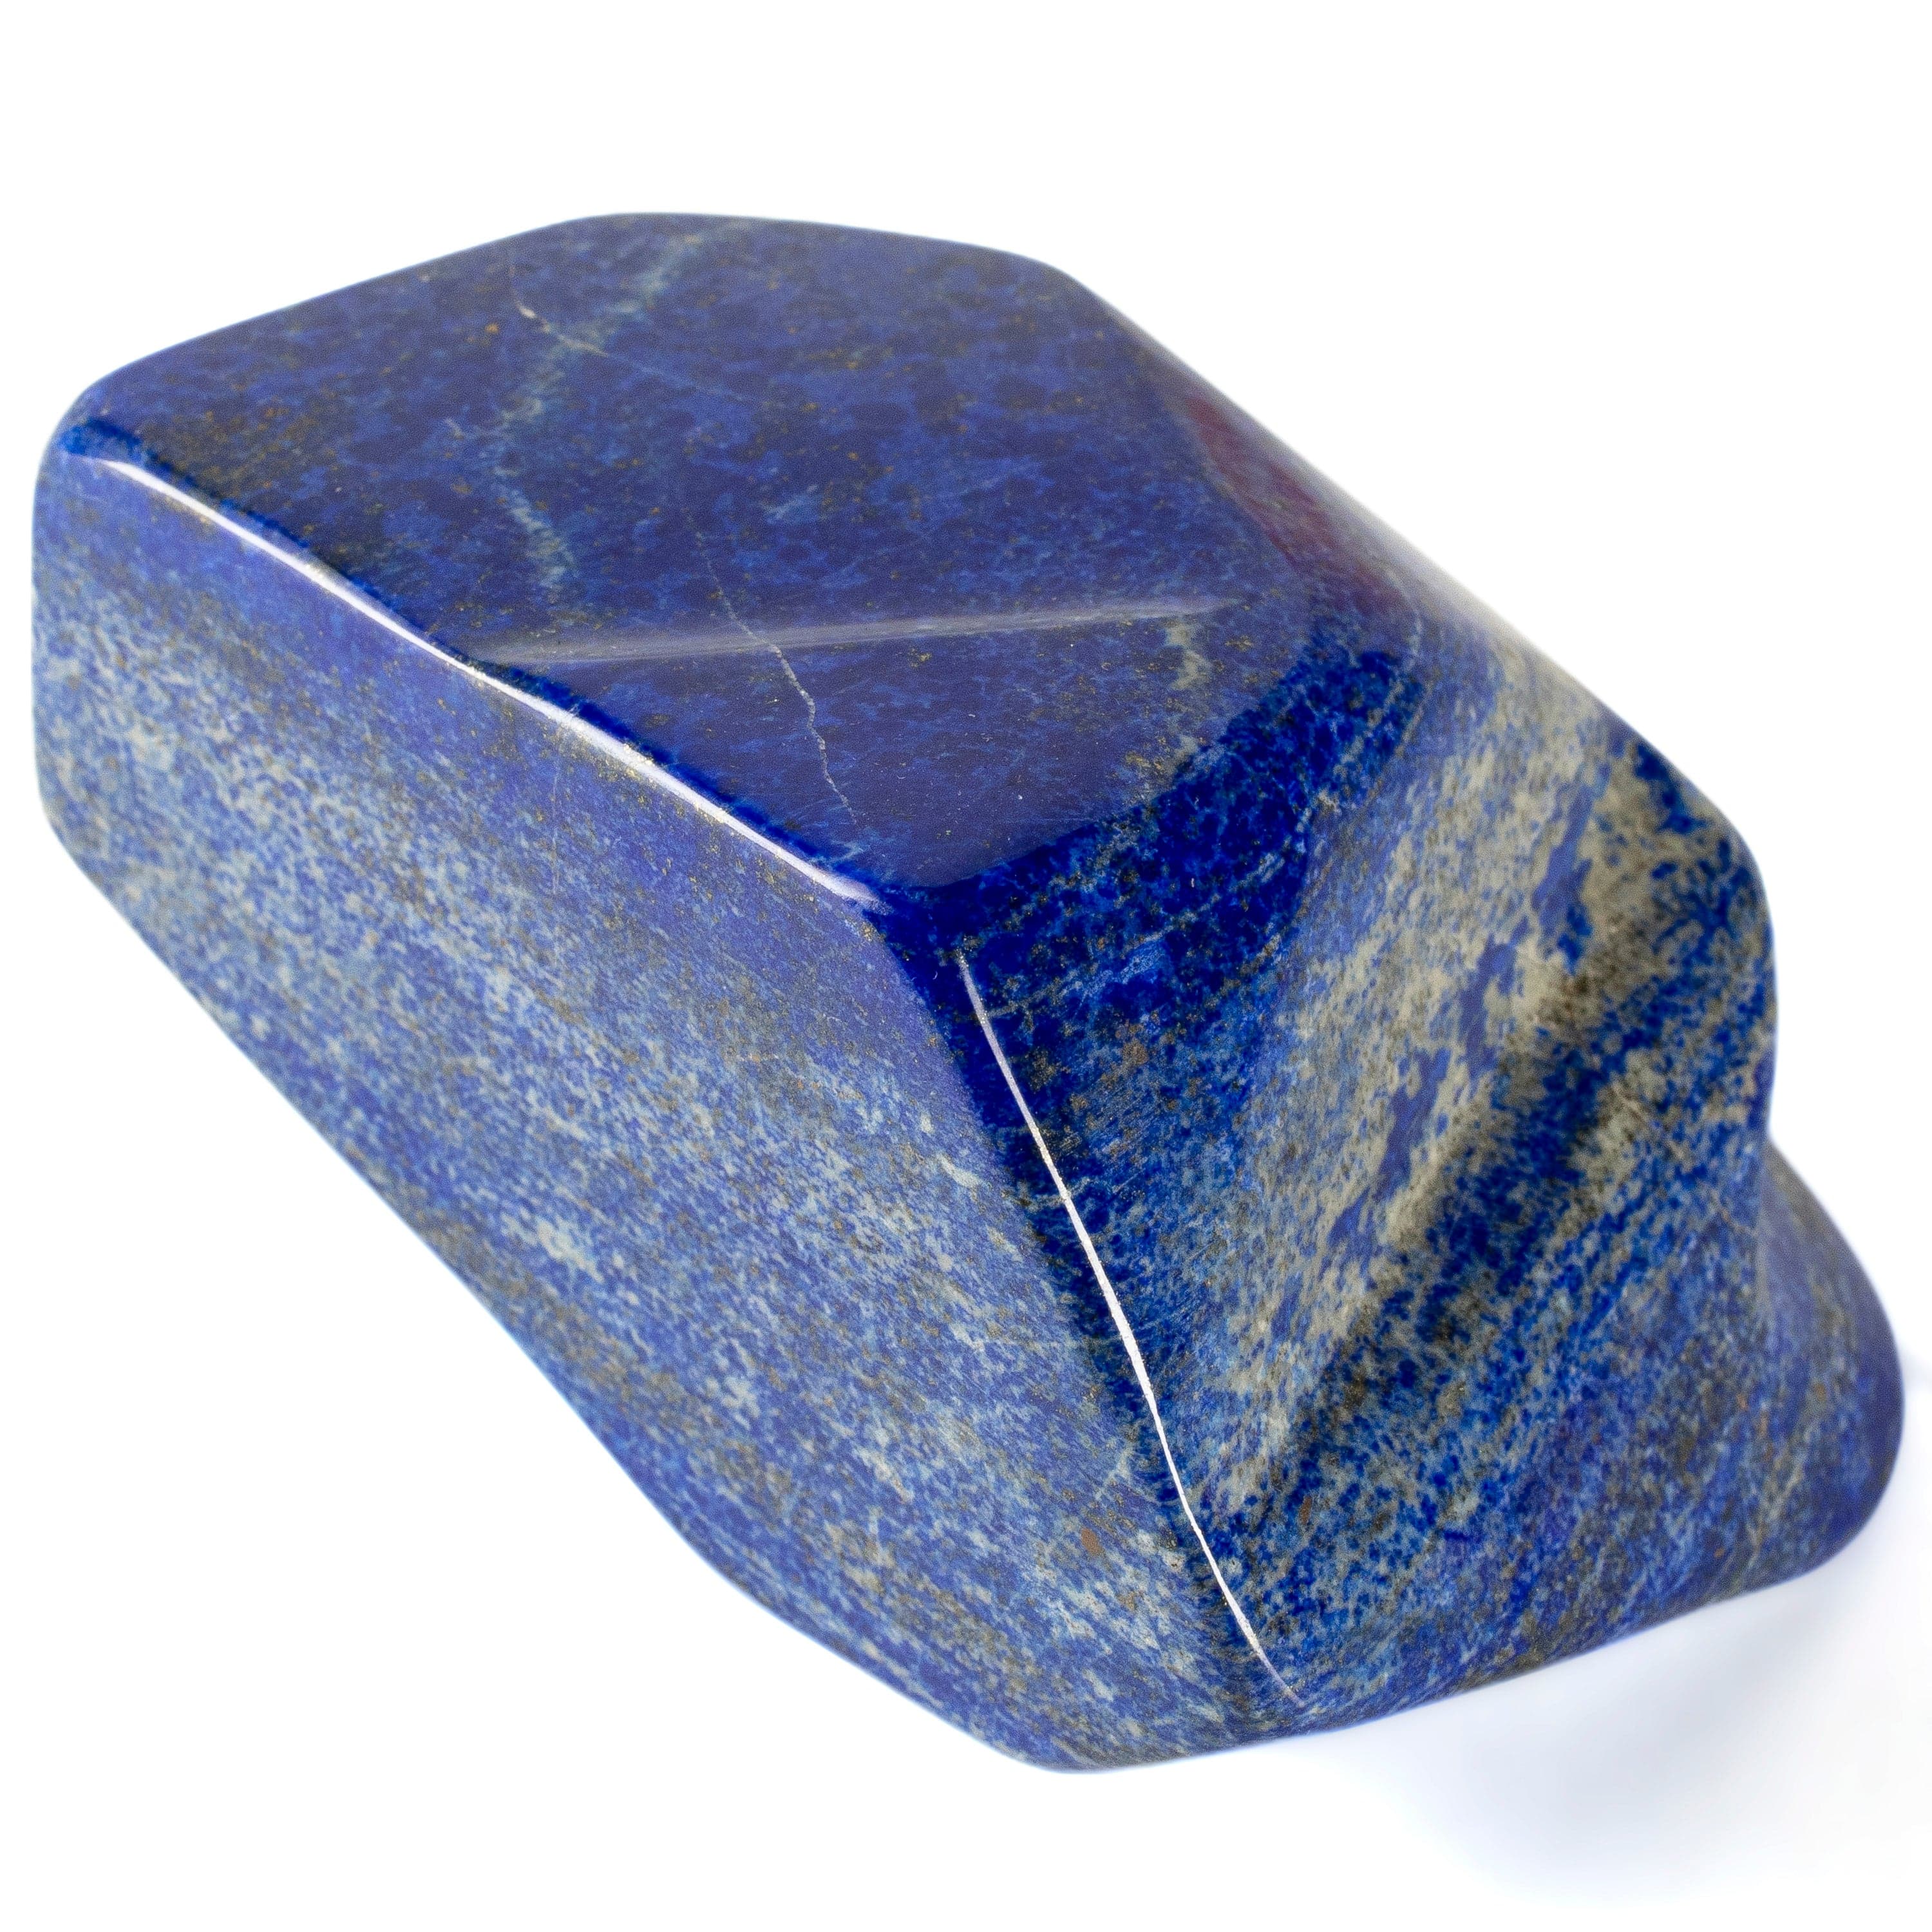 Kalifano Lapis Lapis Lazuli Freeform from Afghanistan - 4.5" / 1,290 grams LP1300.006